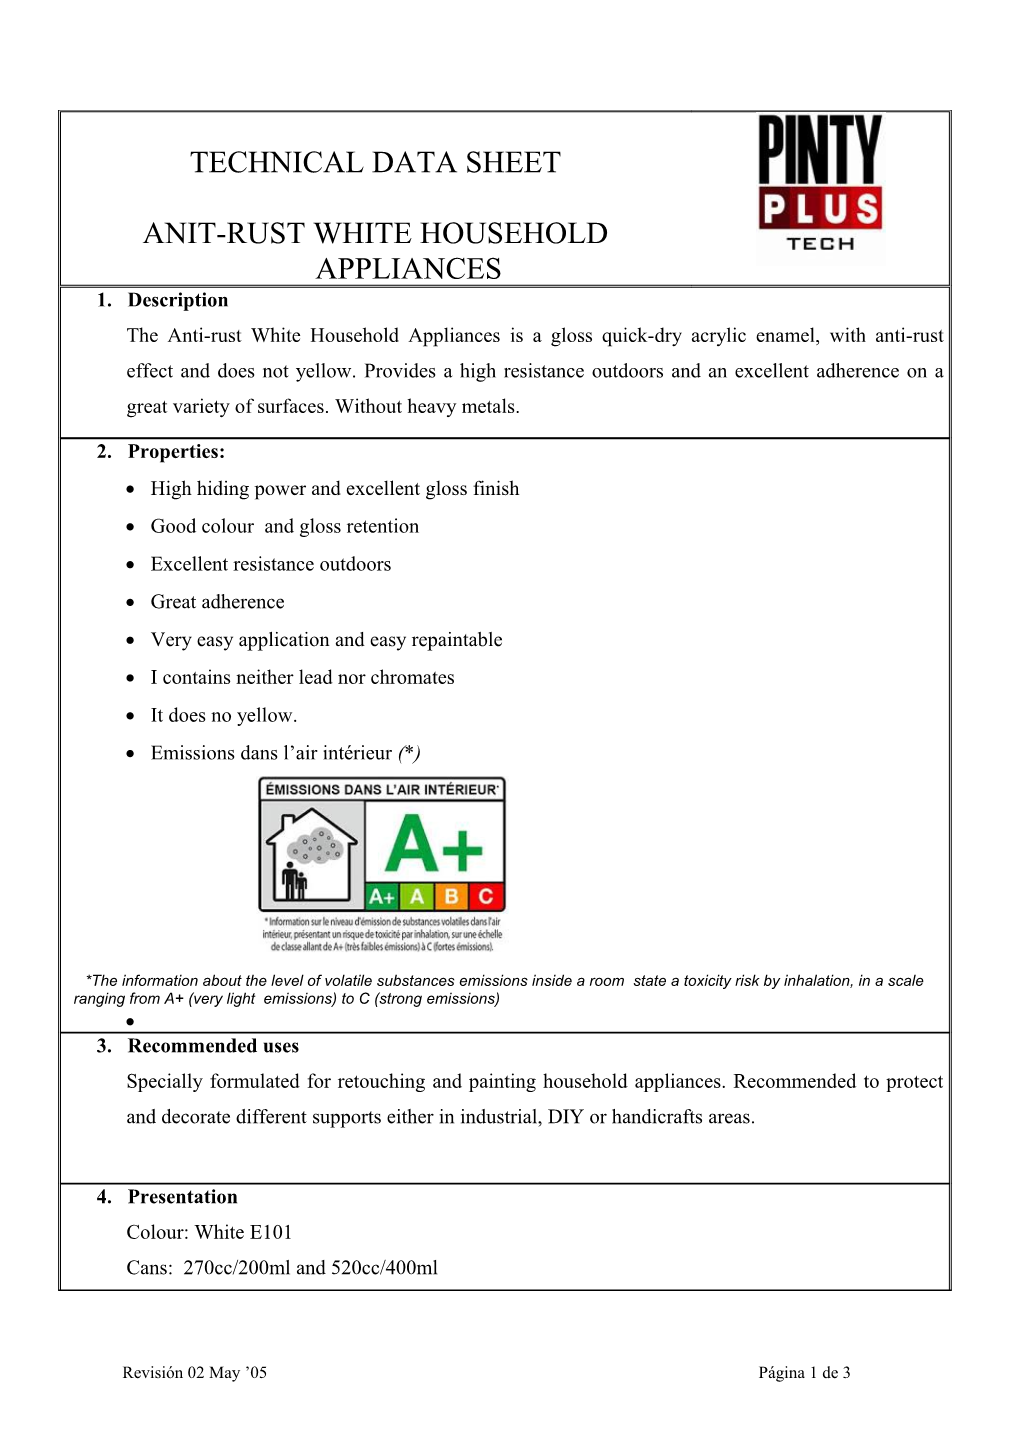 Technical Data Sheet Anit-Rust White Household Appliances